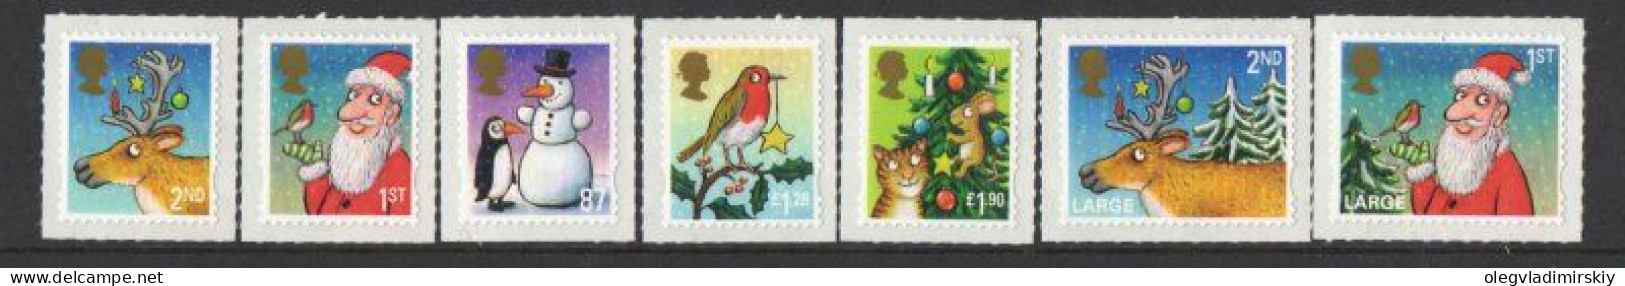 Great Britain United Kingdom 2012 Christmas Set Of 7 Self-adhesive Stamps MNH - Christmas